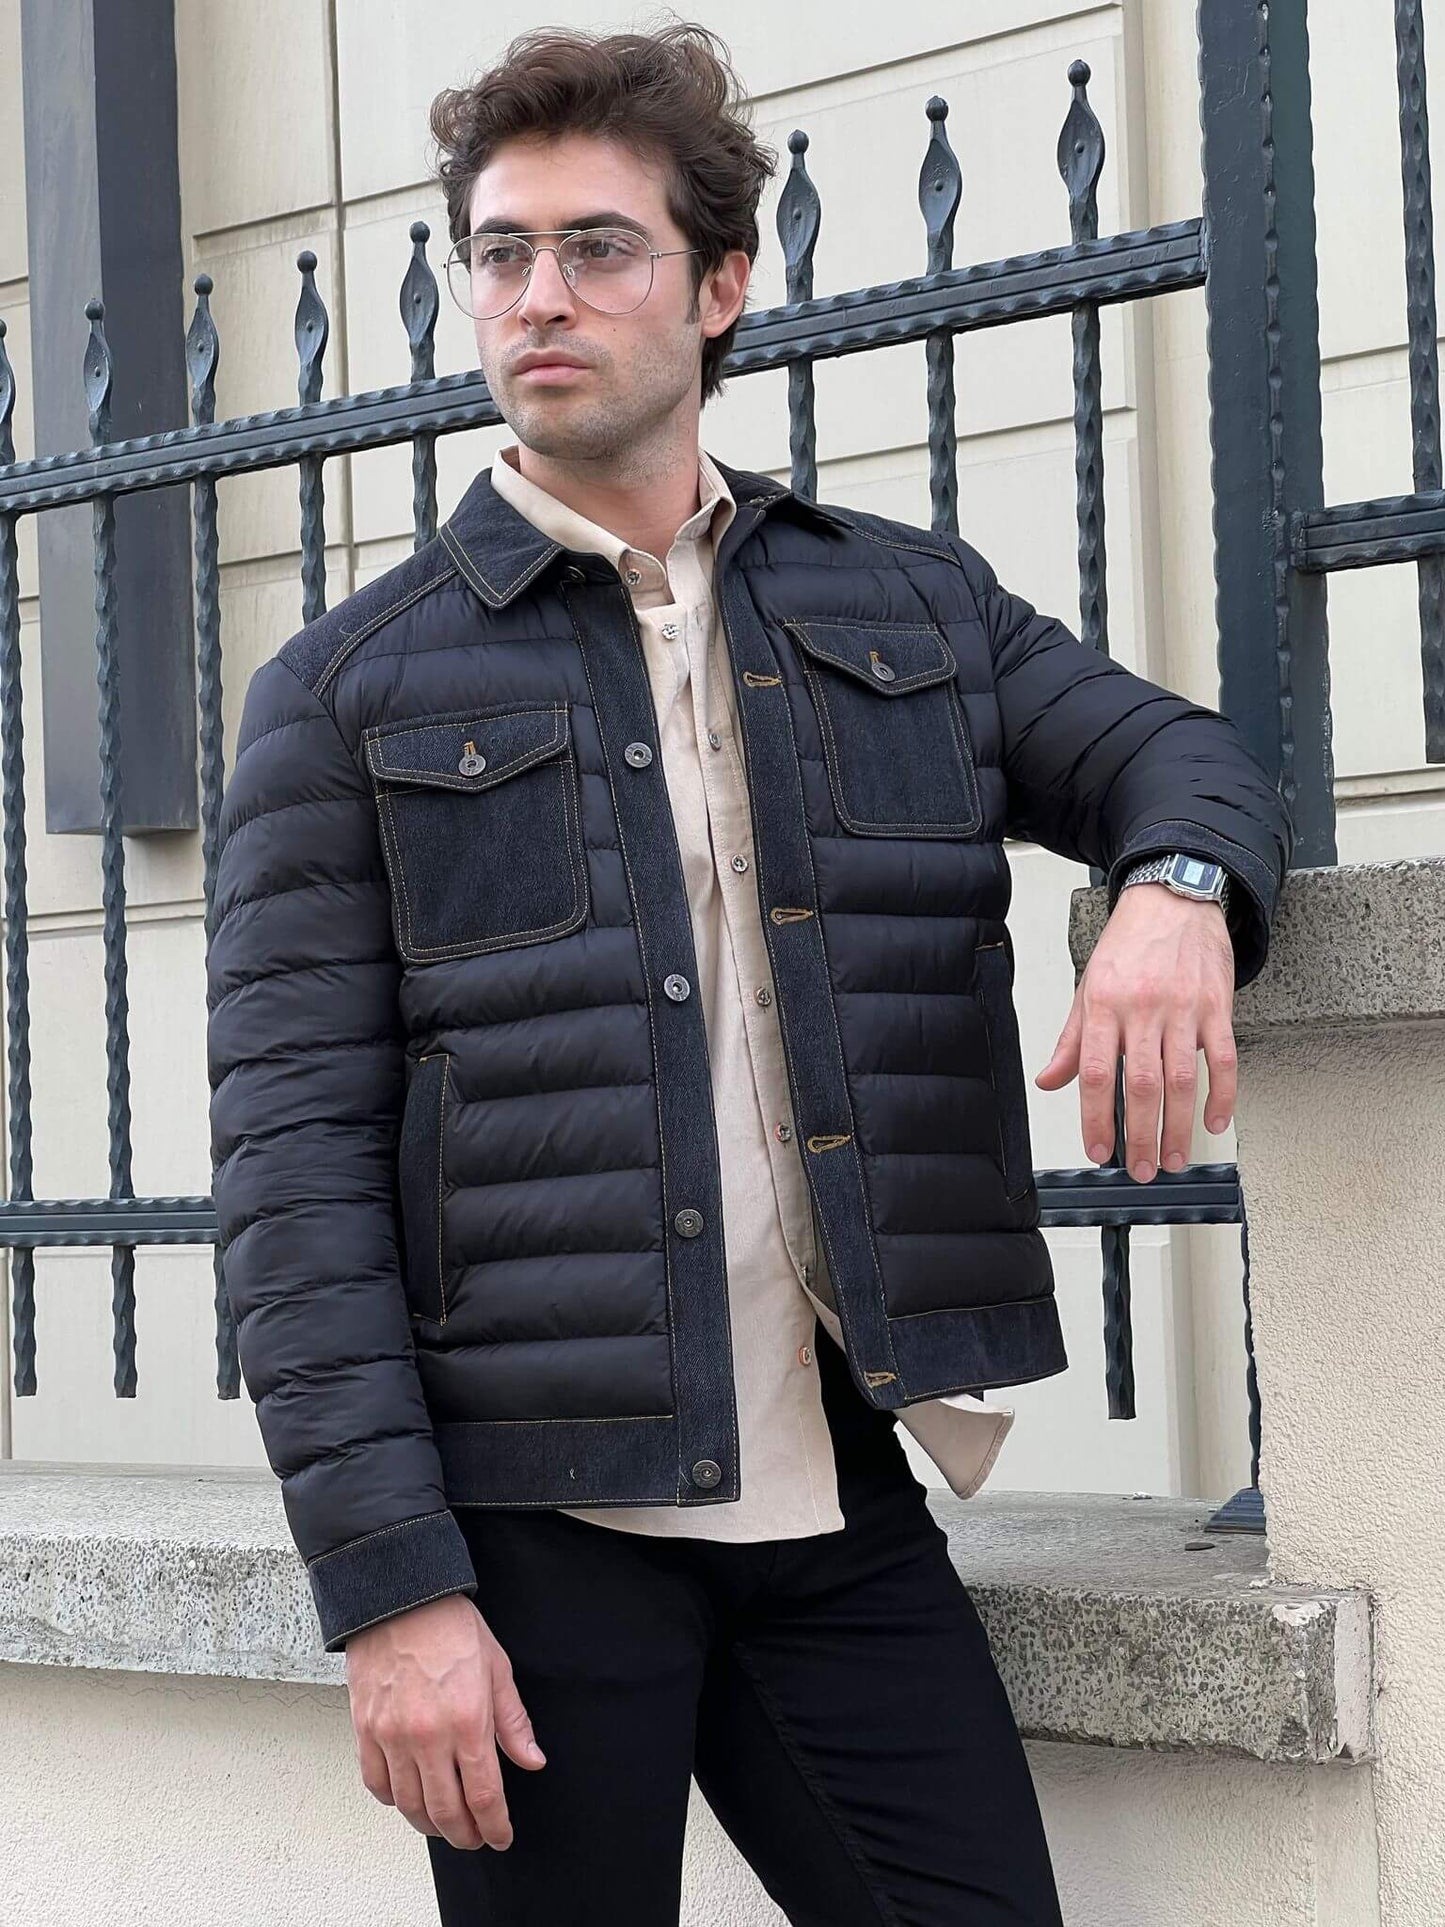 Stylish male model confidently wears a sleek black denim coat, exuding urban cool vibes.